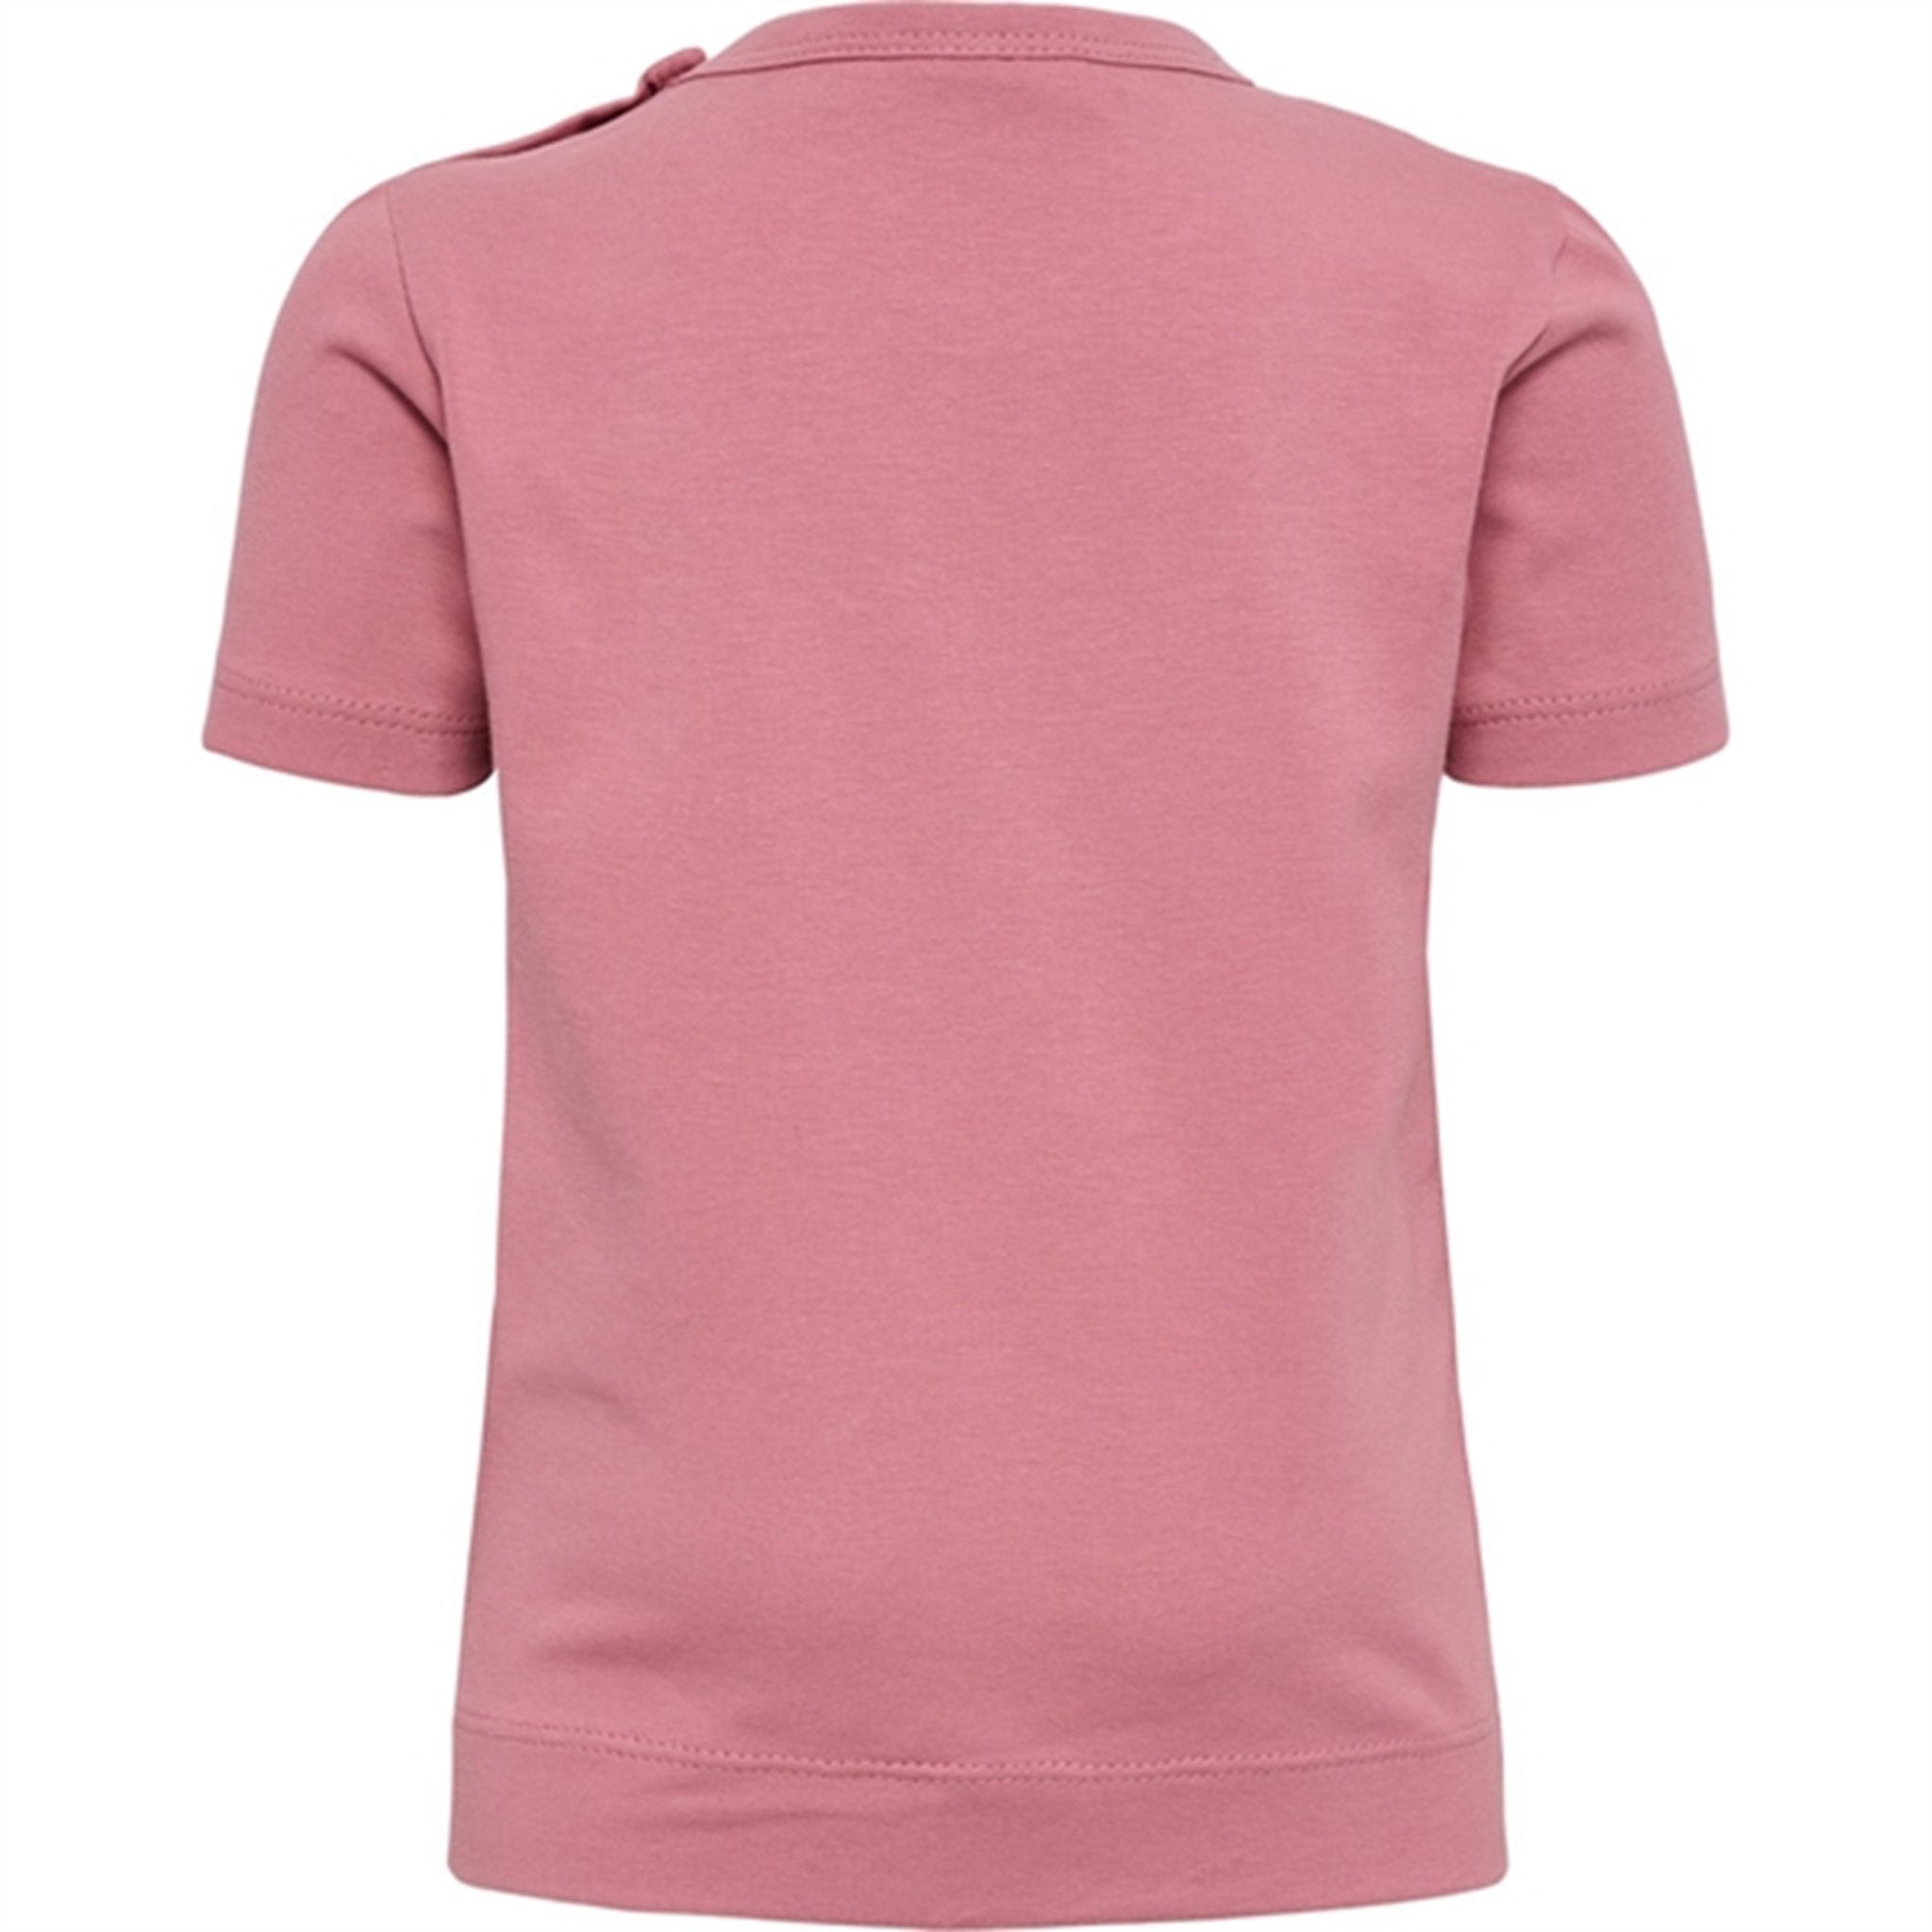 Hummel Mesa Rose Talya T-shirt S/S 4